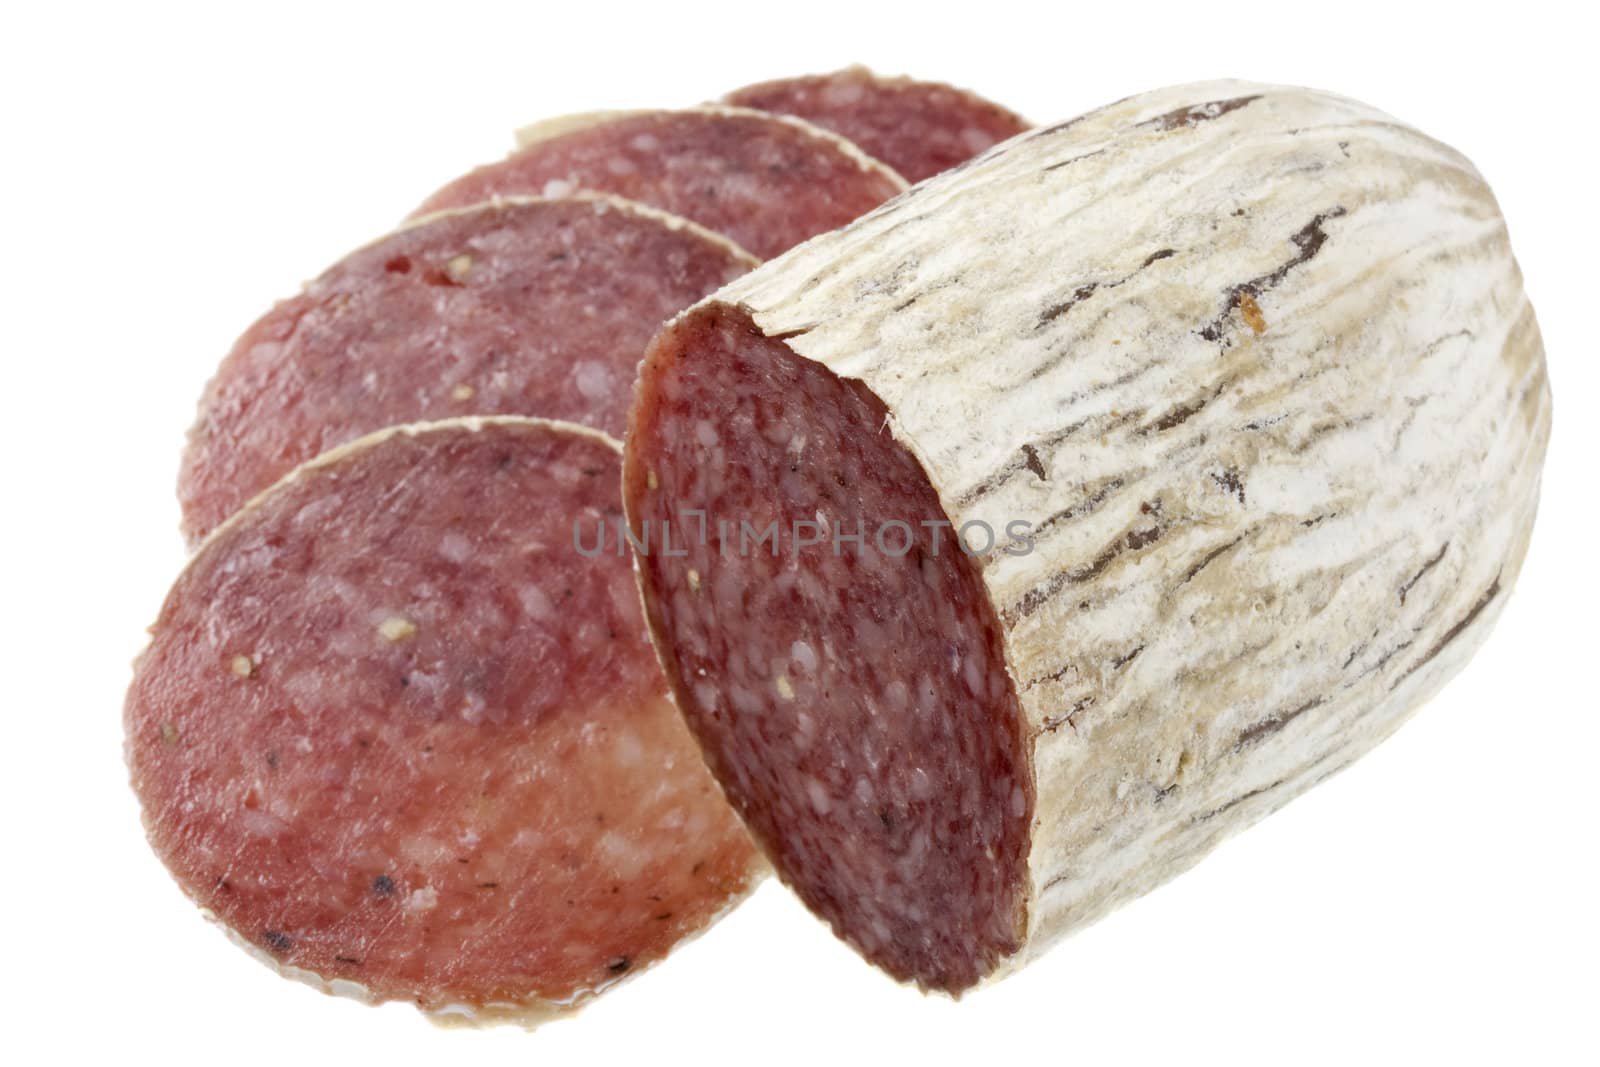 dried Italian salami by PixelsAway